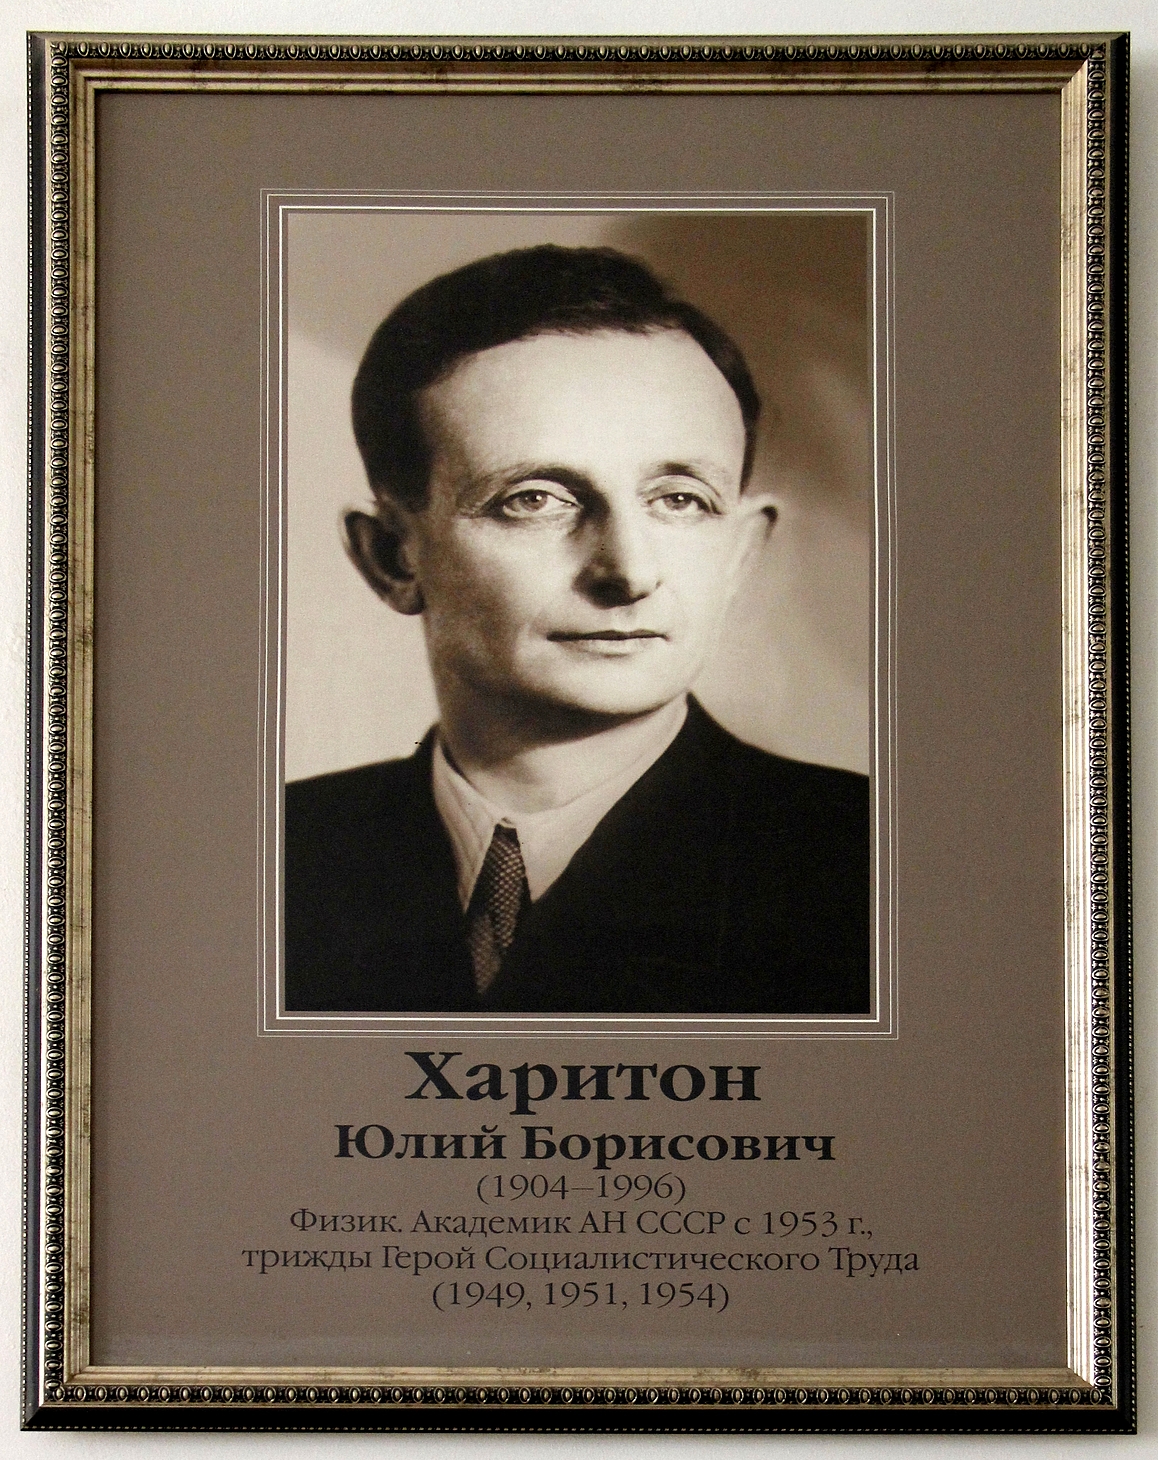 Anatoly Alexandrov (engineer) - Wikipedia